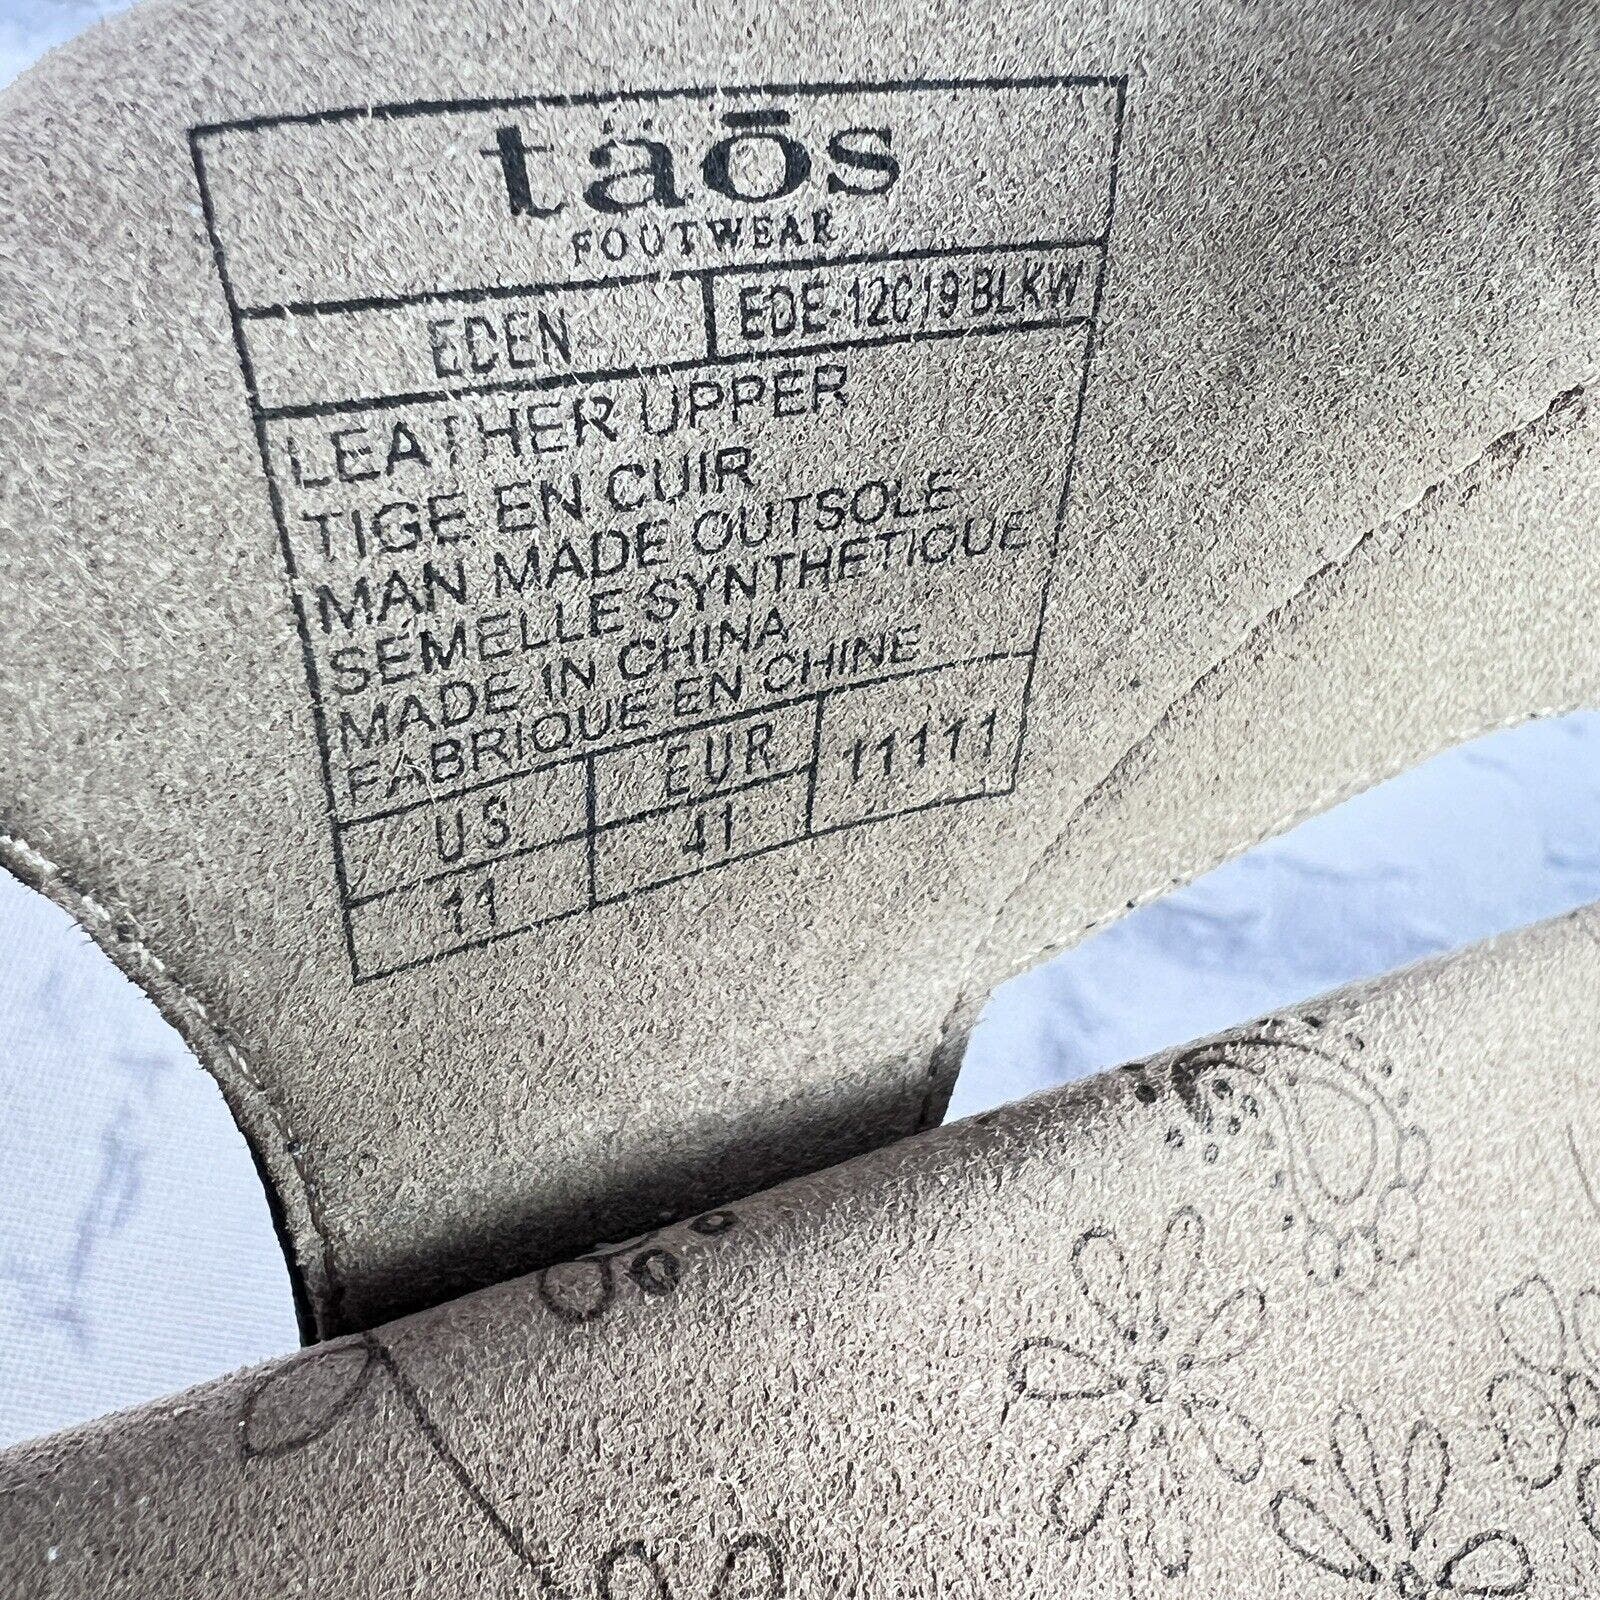 Taos Eden Sandals Women’s 11 Leather Black Adjustable Straps Casual Shoe